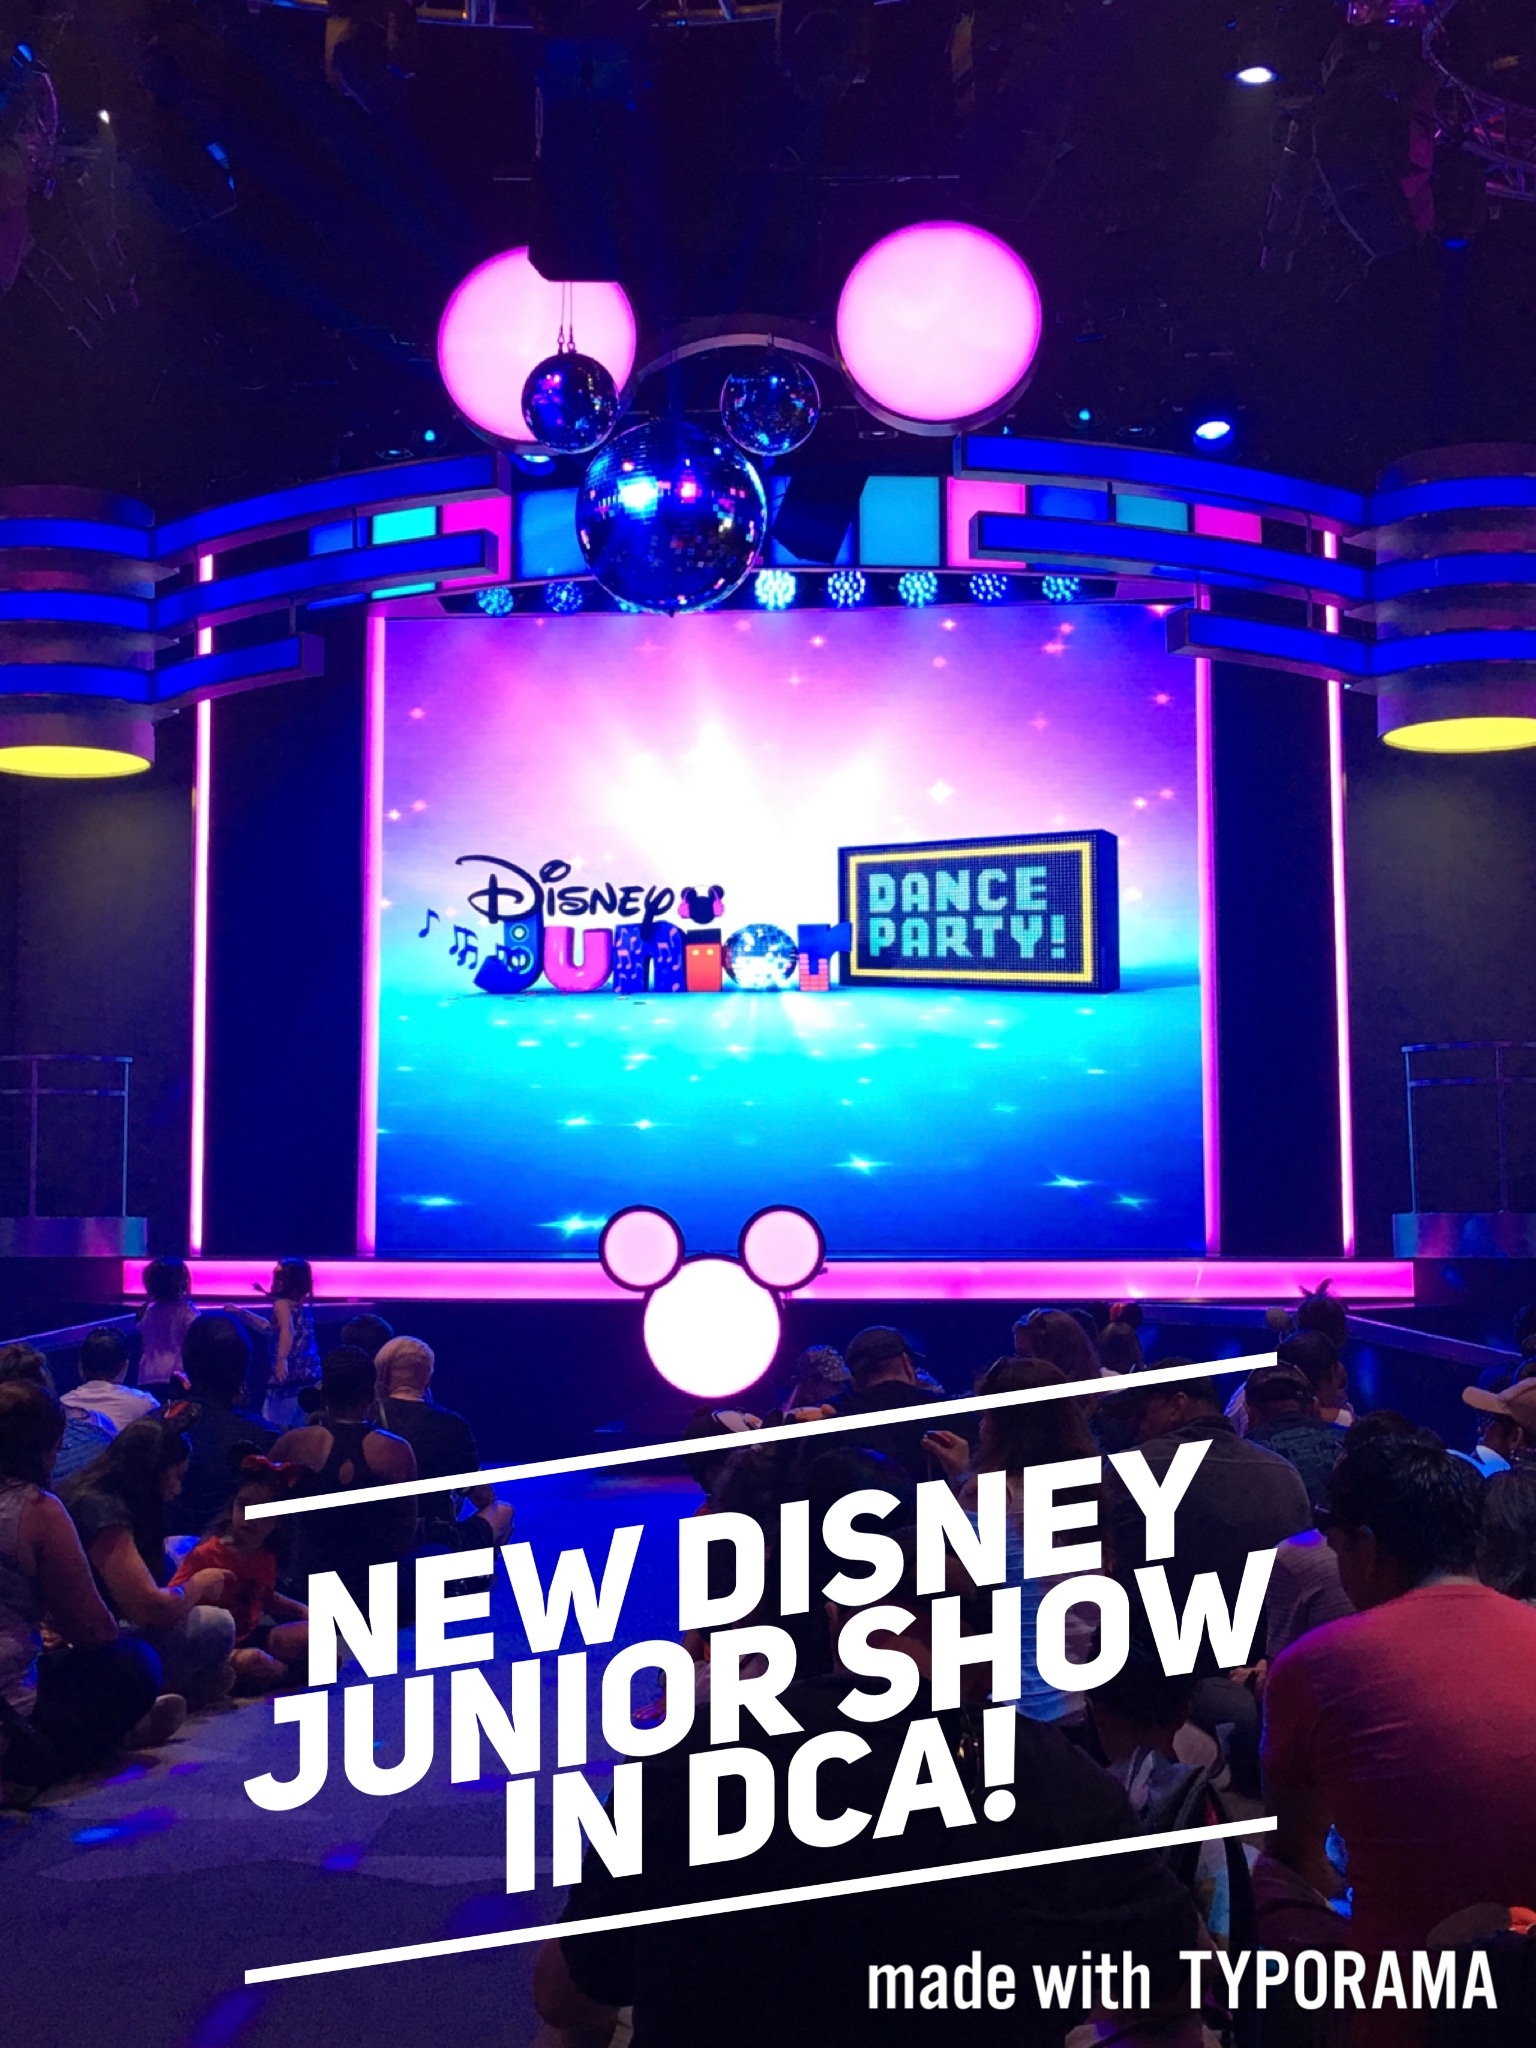 Disney Junior Dance Party' Now Open at Disney California Adventure